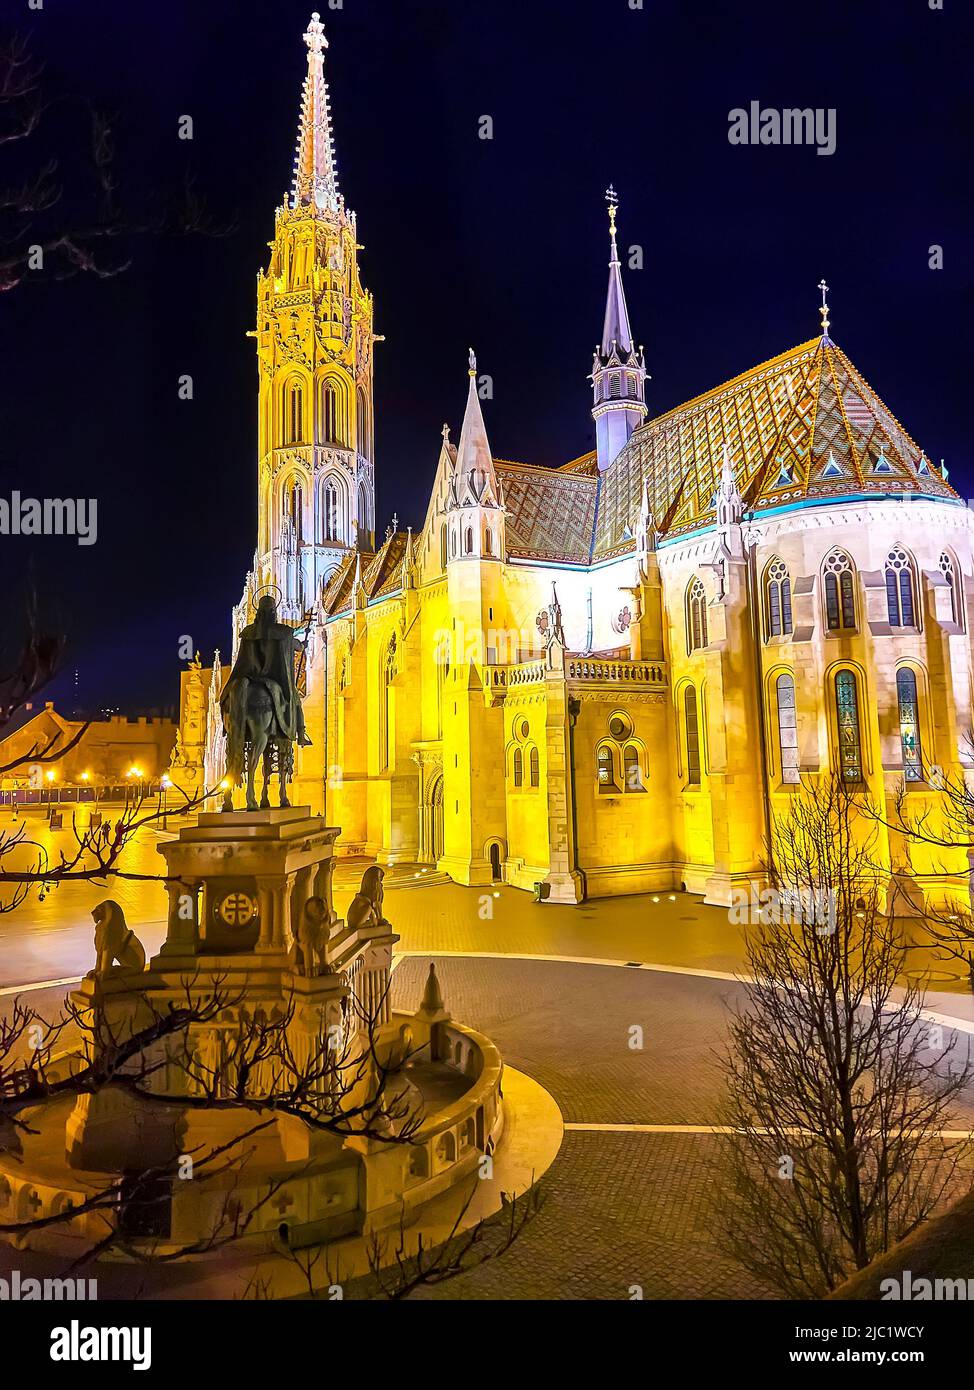 The night visit of Fisherman's Bastion with its main landmarks in bright illumination, Budapest, Hungary Stock Photo